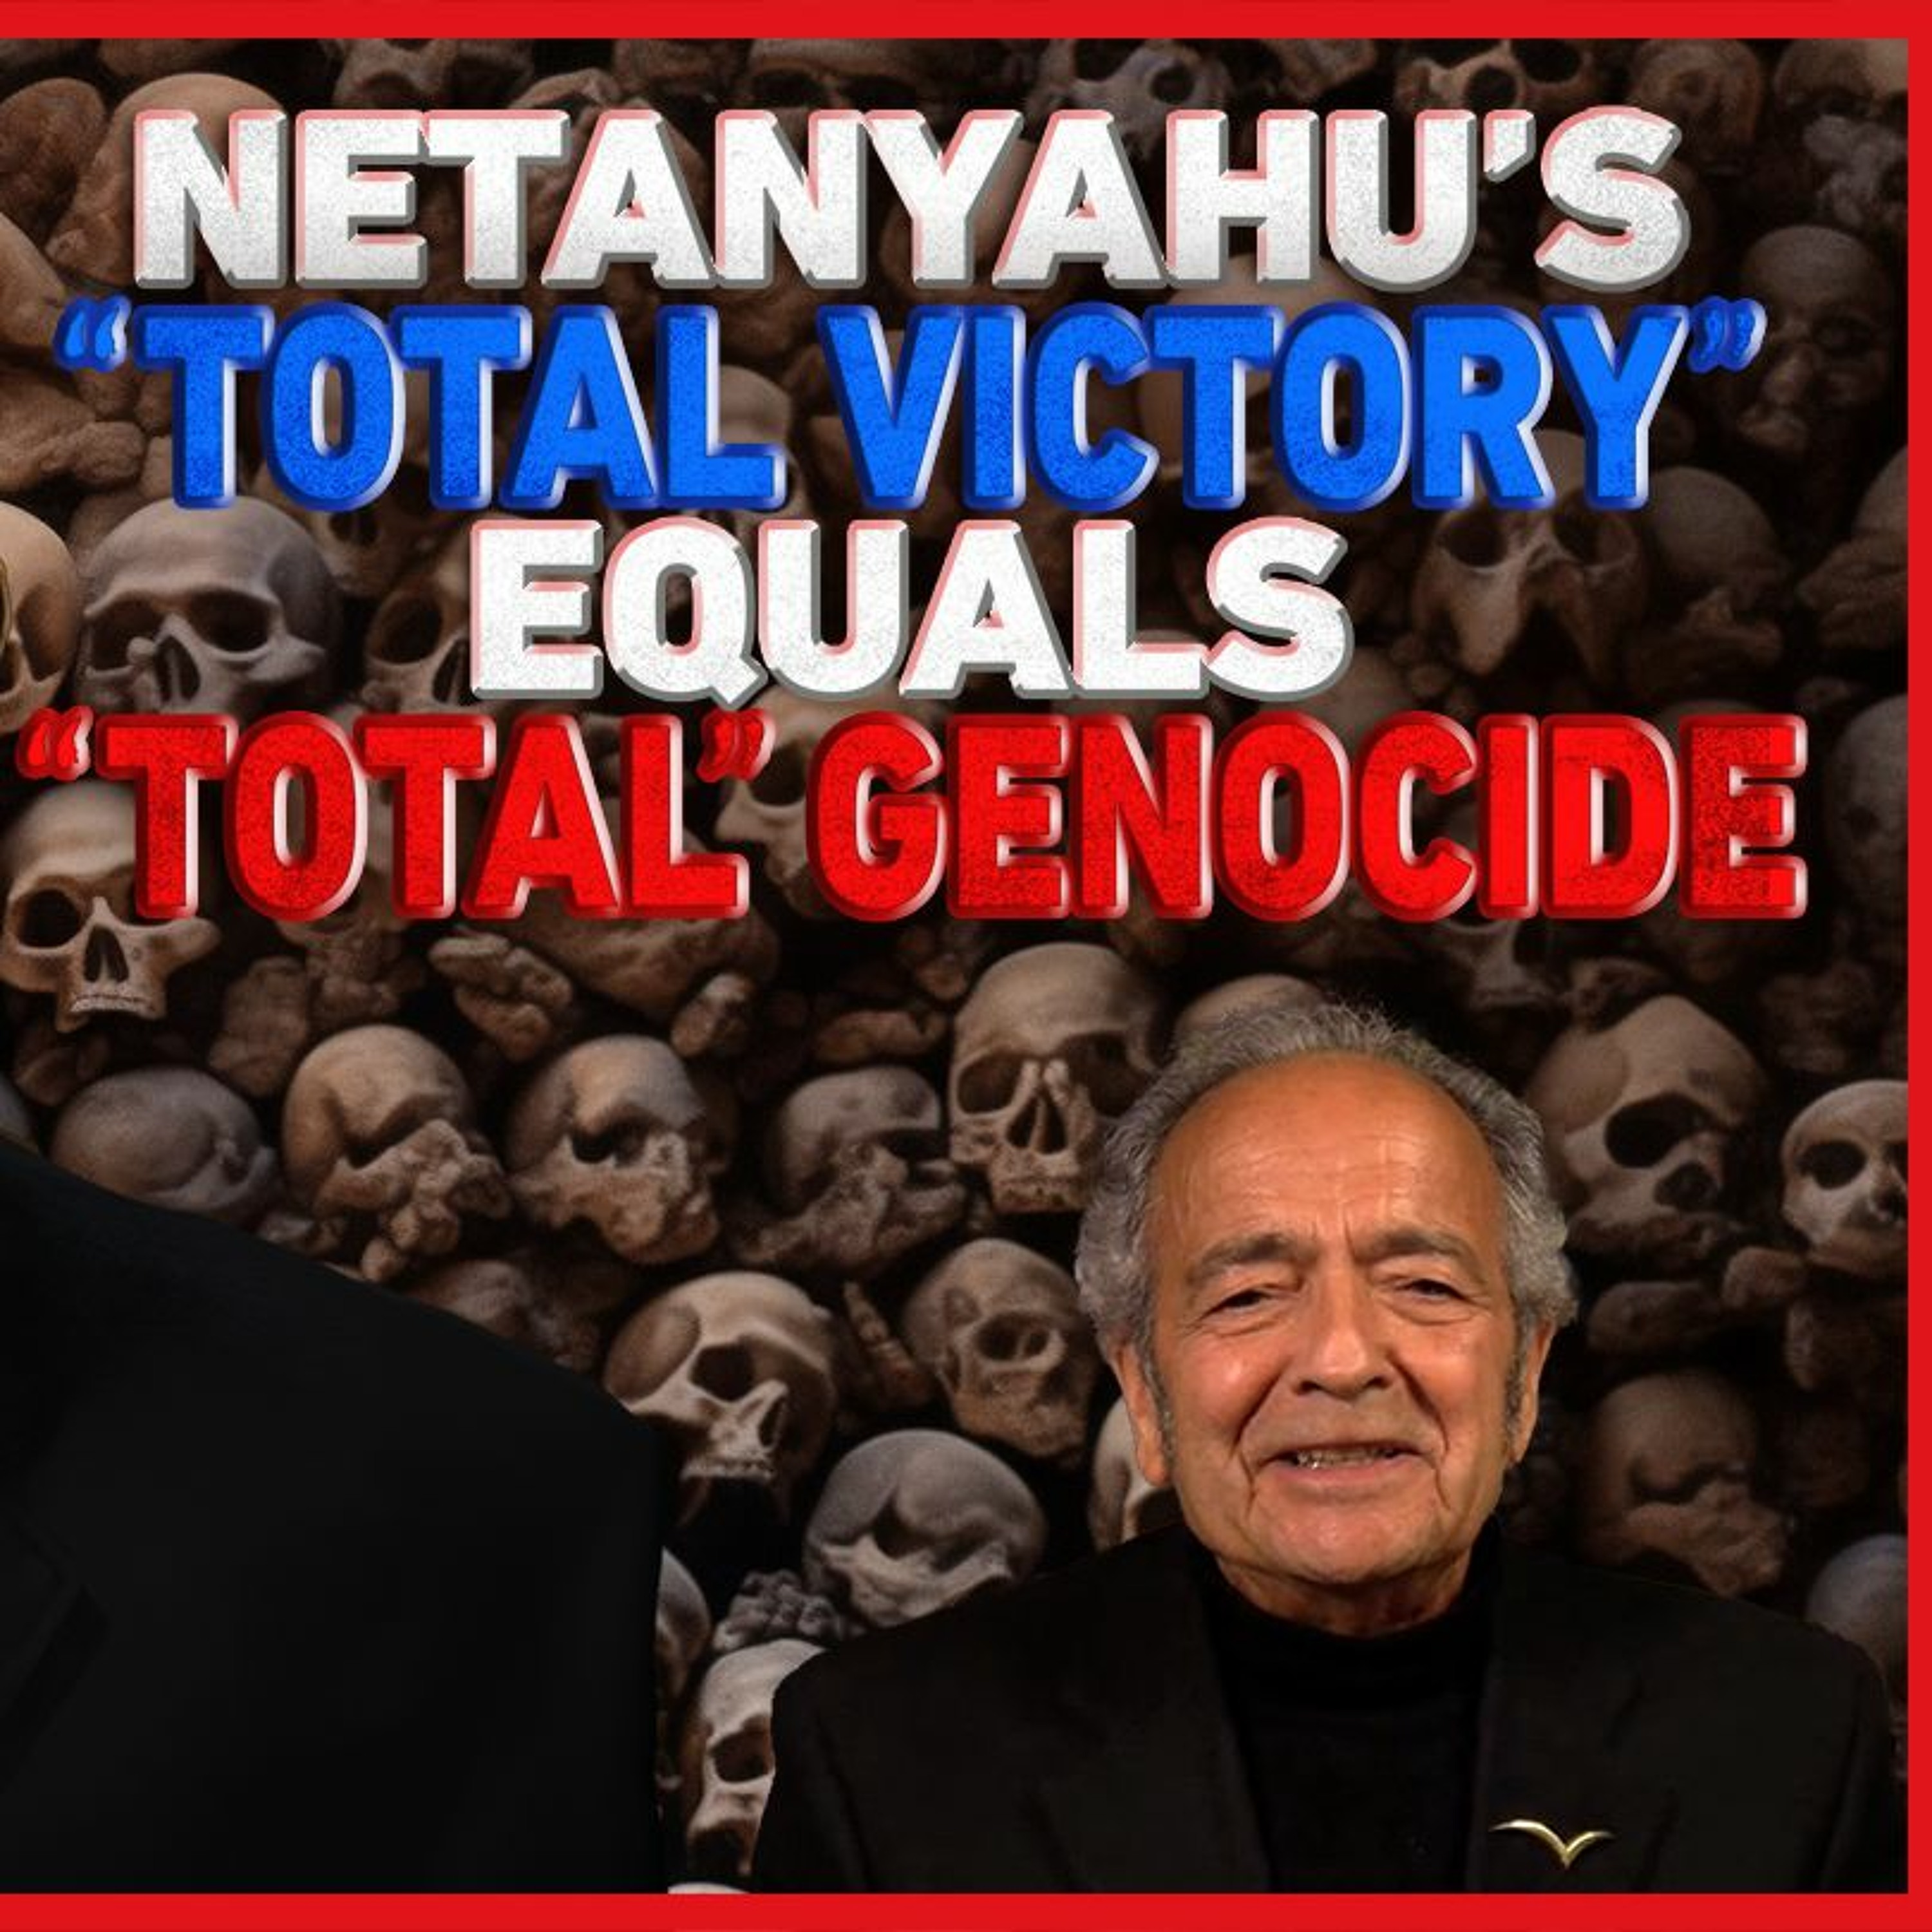 NETANYAHUS TOTAL VICTORY EQUALS TOTAL GENOCIDE